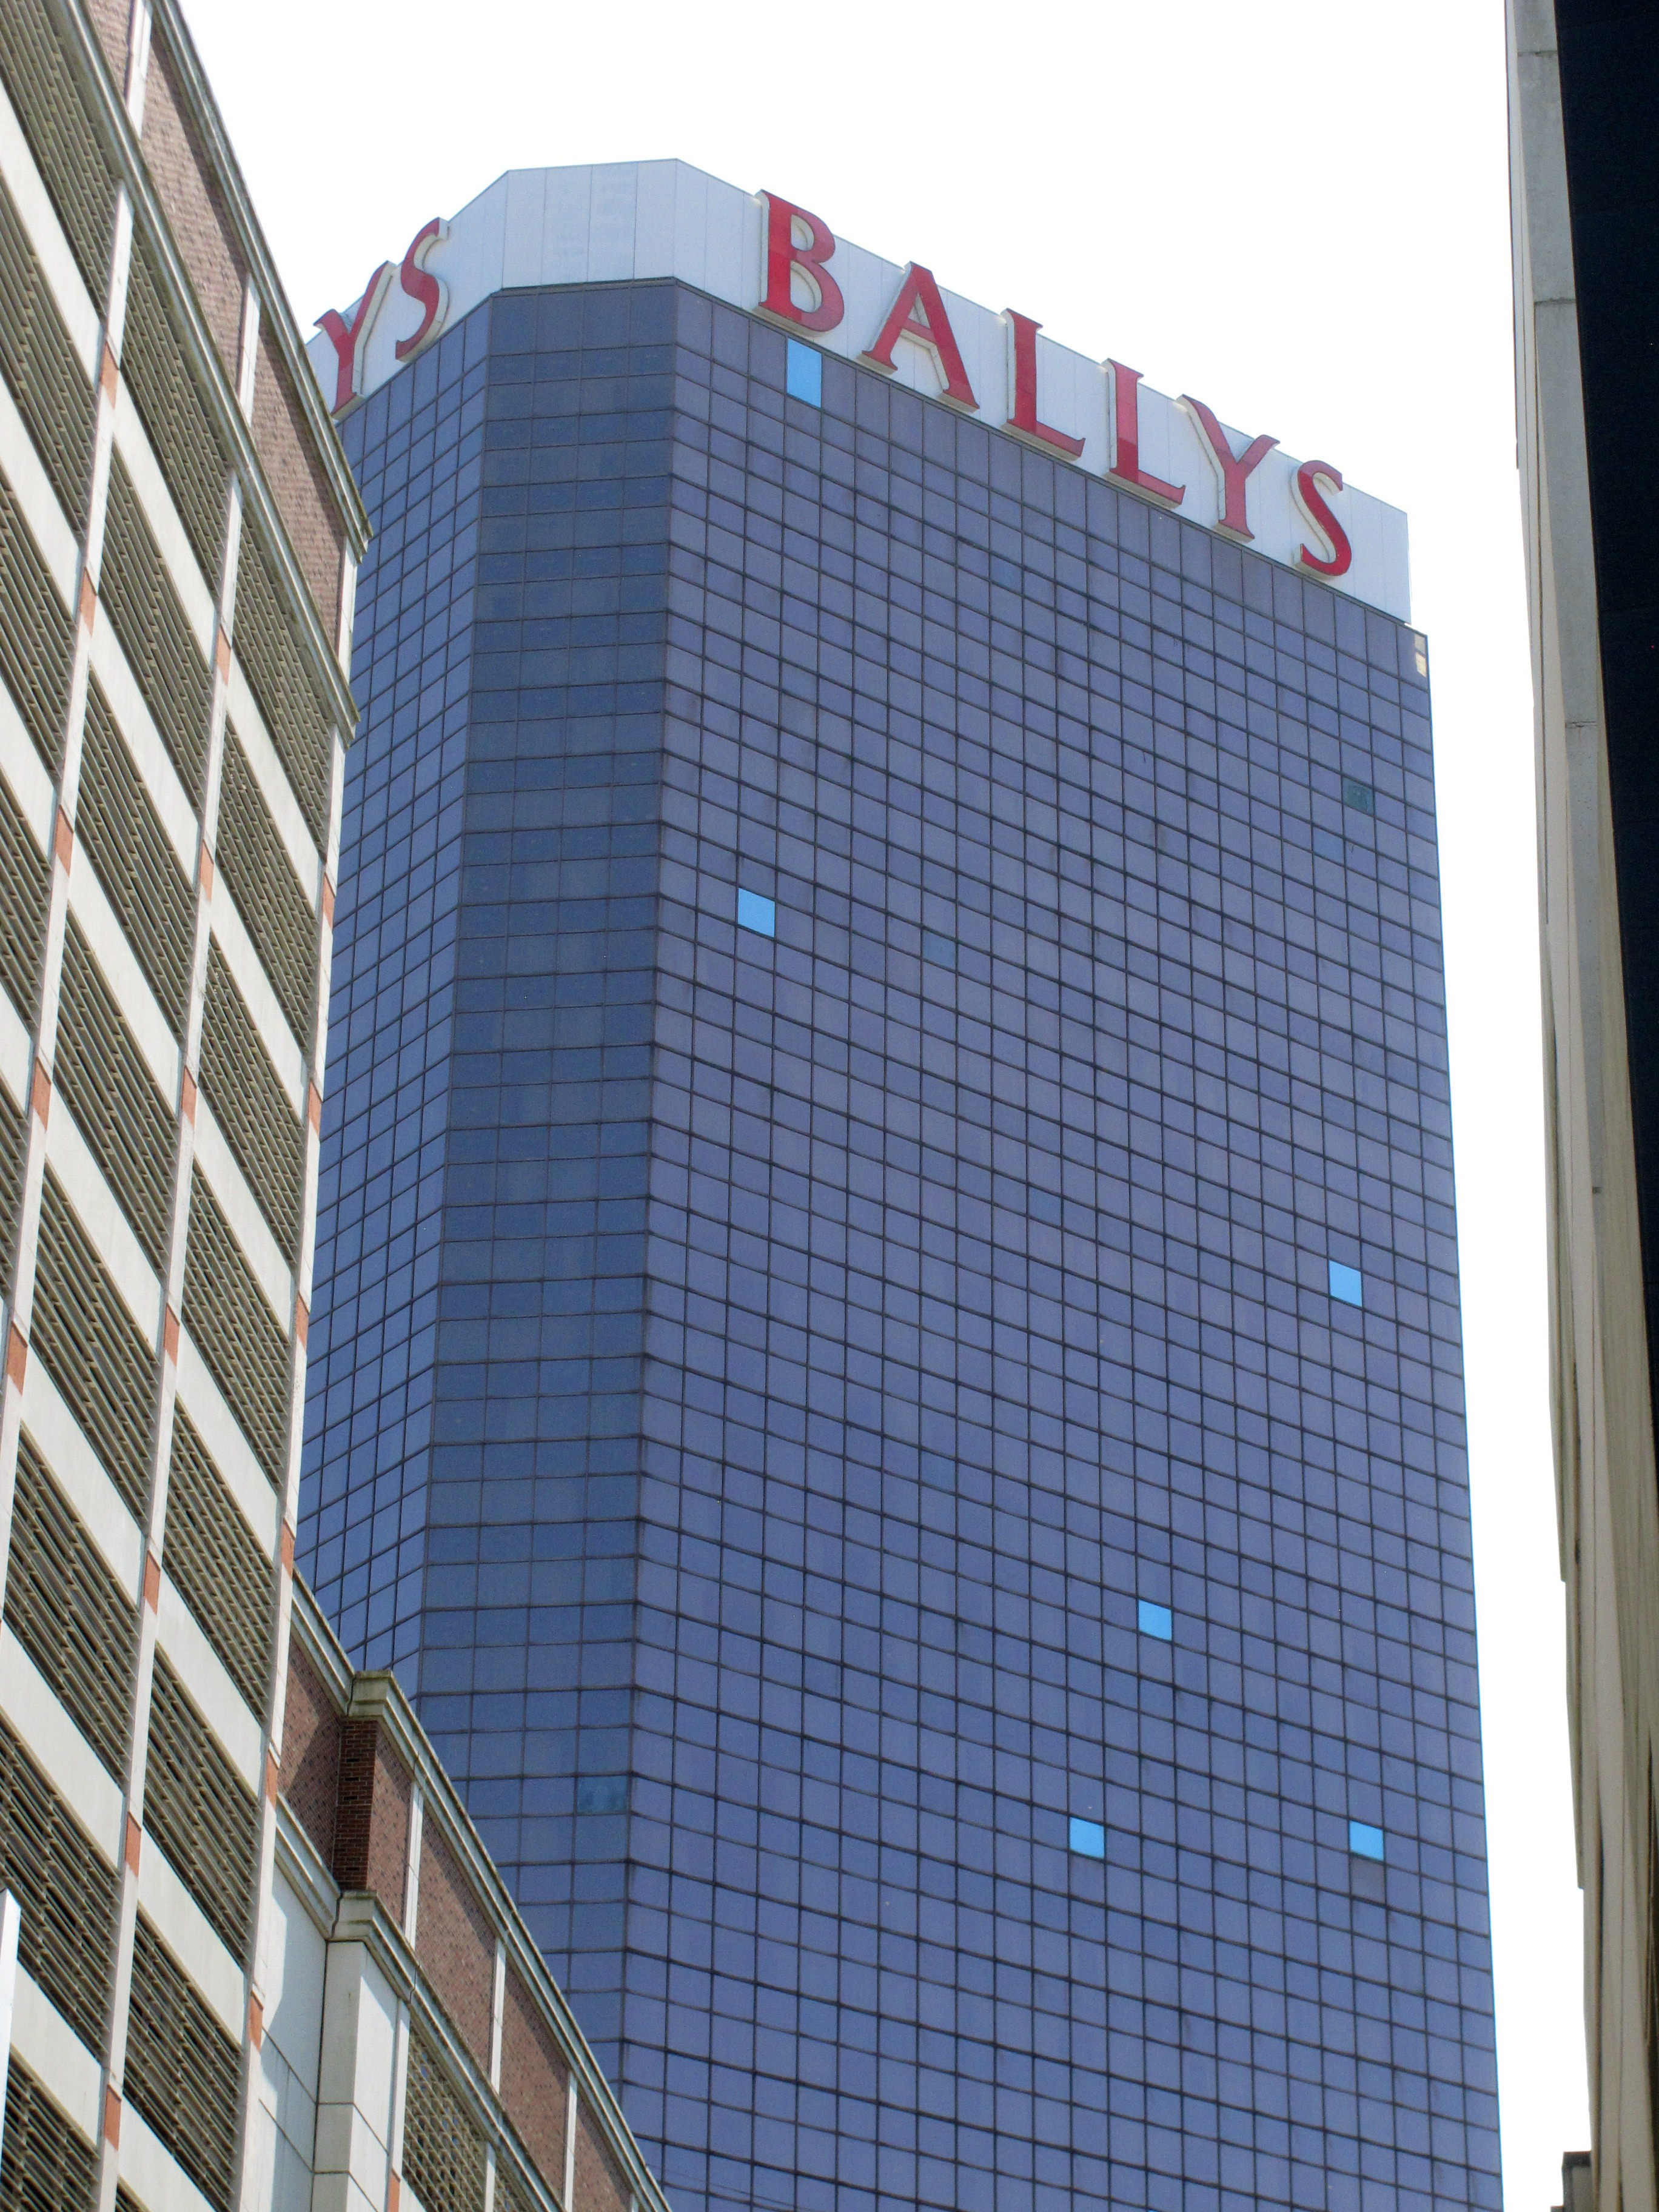 Bally's Resort Tower Room Remodel